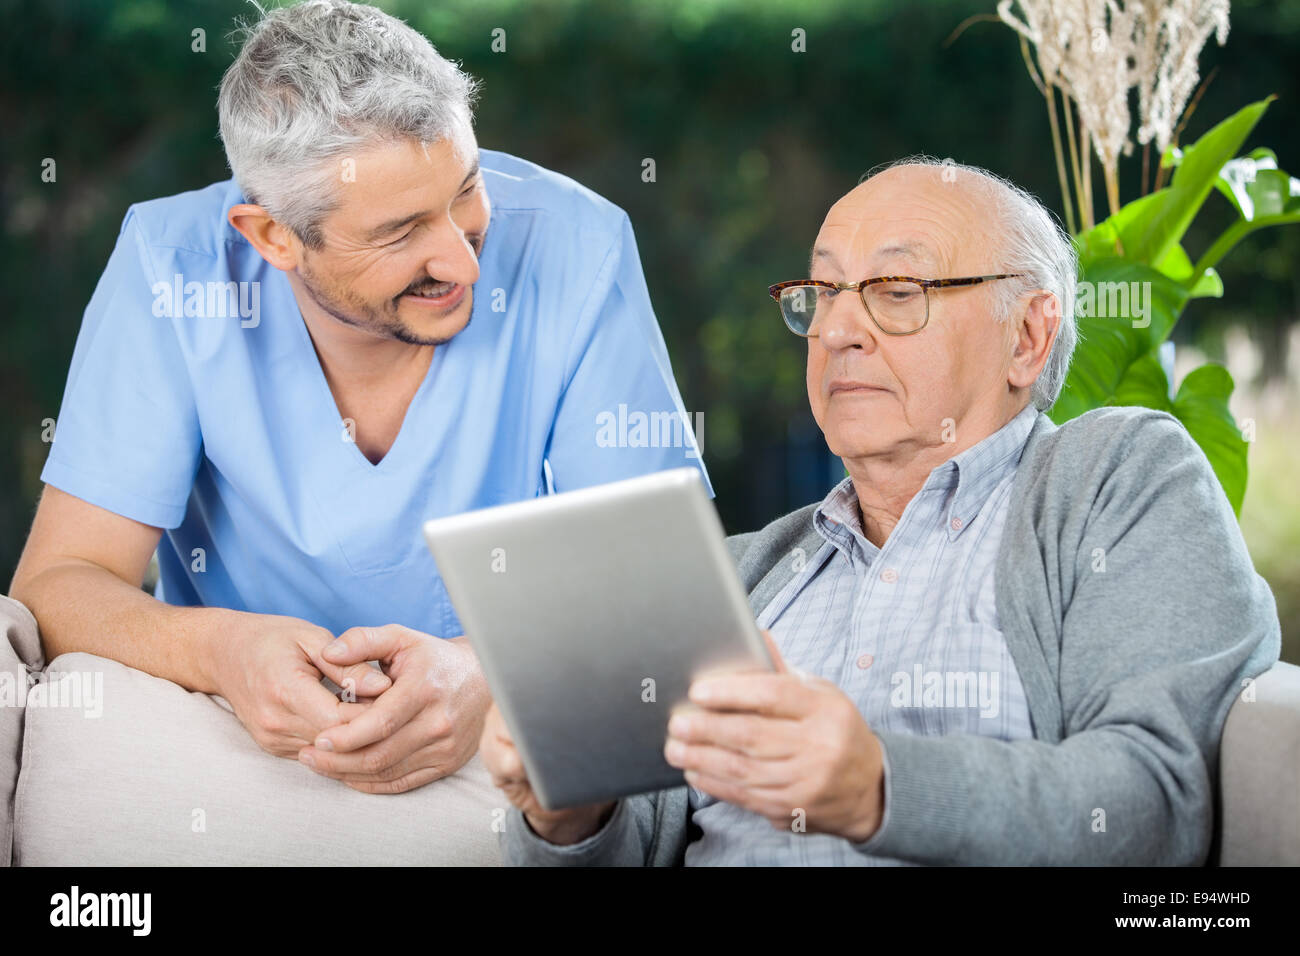 Male Caretaker Looking At Senior Man Using Tablet Computer Stock Photo